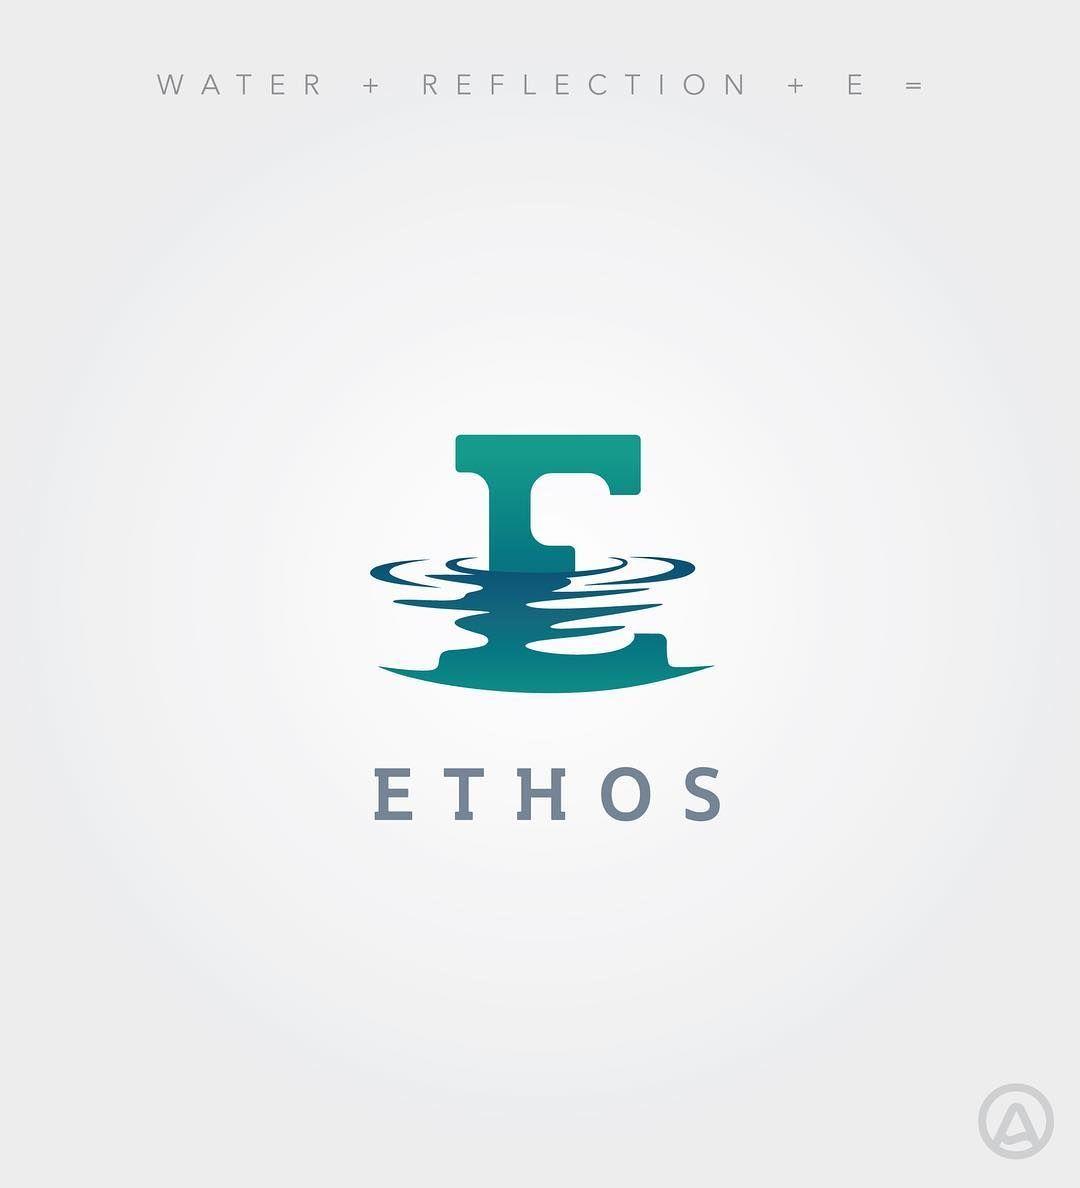 Reflection Logo - Ethos logo more organic feel to water reflection. #logo ...